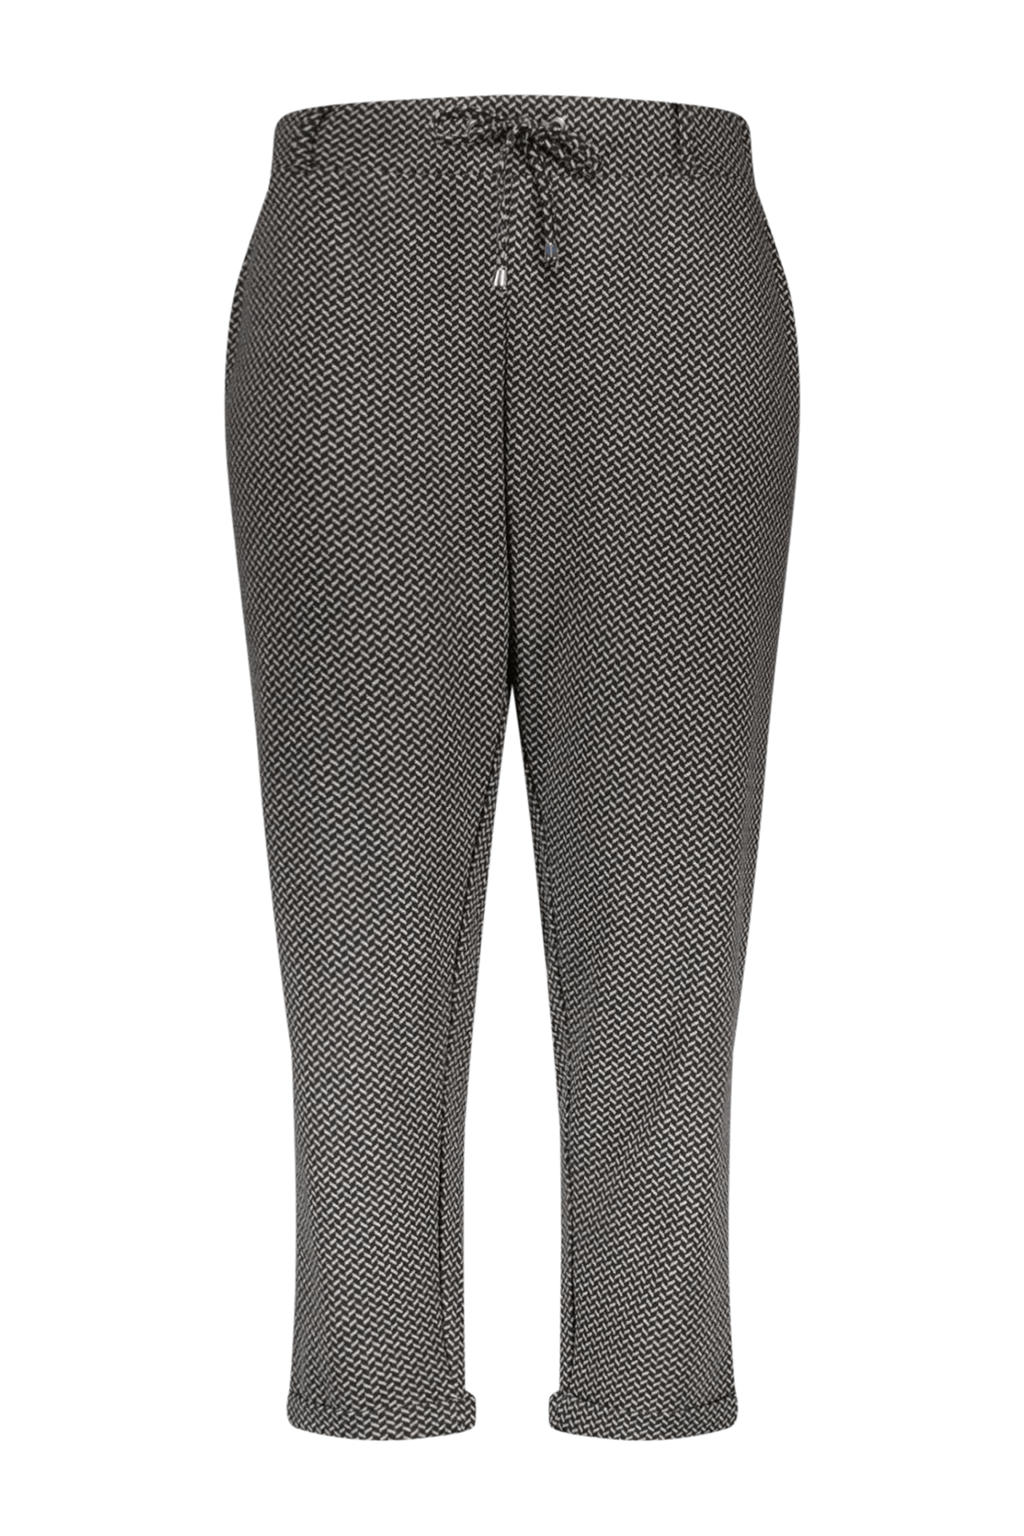 MS Mode high waist slim fit sweatpants met all over print zwart/wit